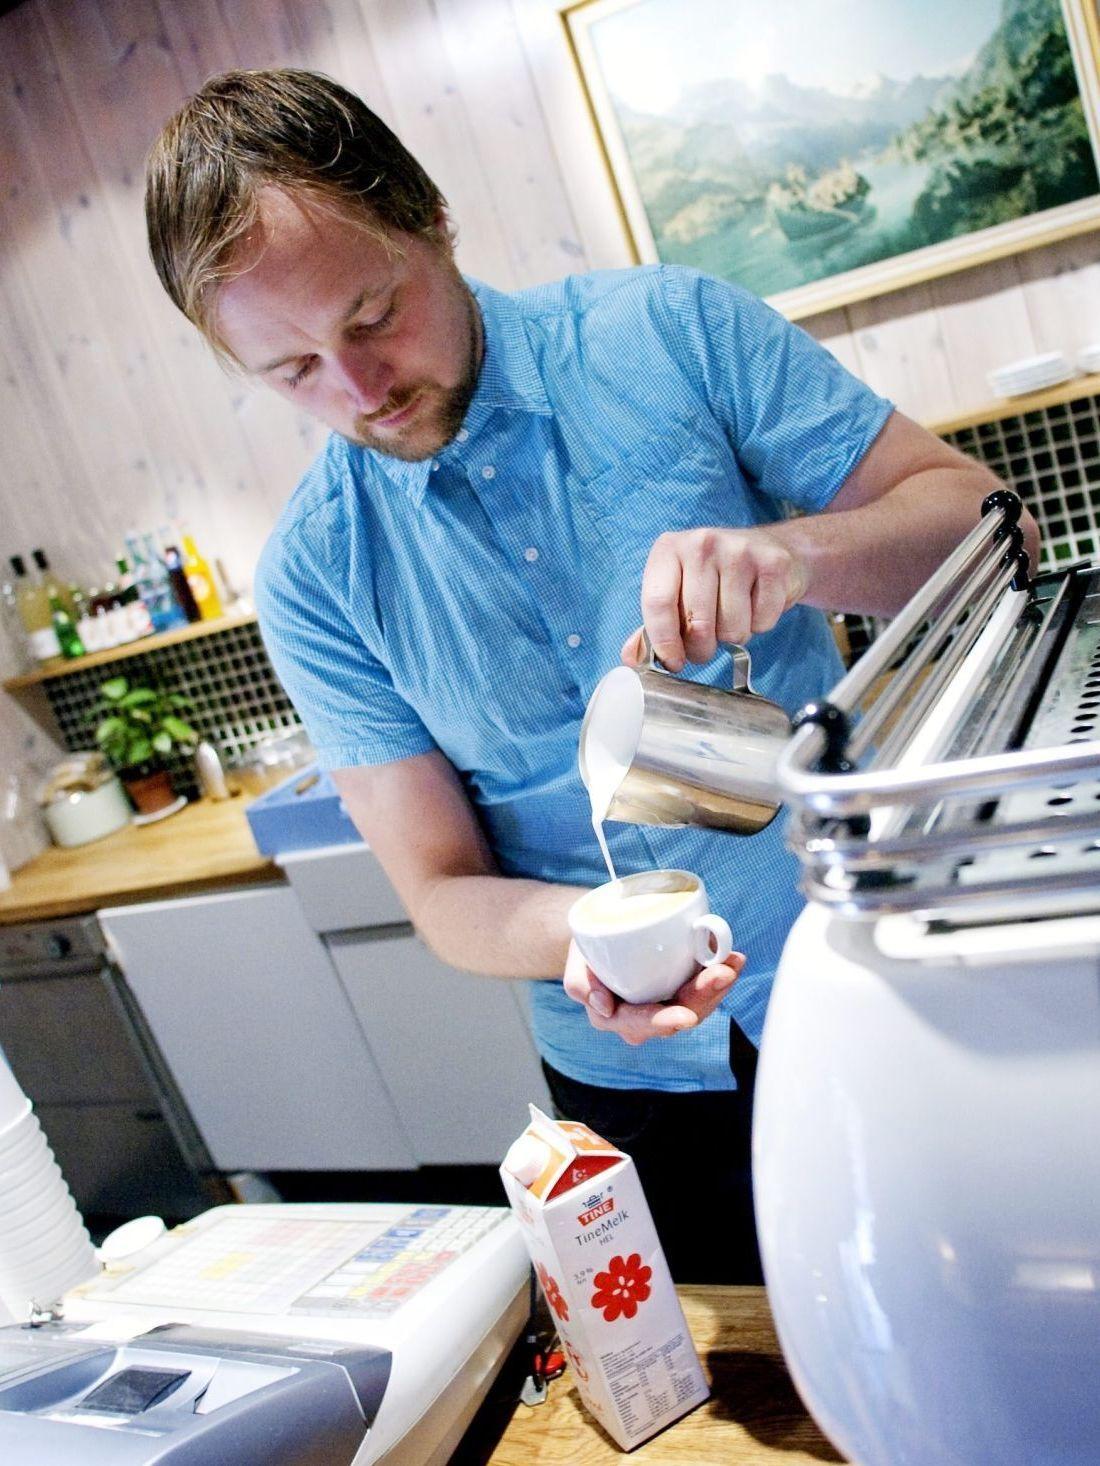 EKSPERT: Rasmus Astrup Helgebostad er tidligere norgesmester i baristakunst og har selv eksperimentert med kaffe og øl. Foto: Henning Carr Ekroll/VG